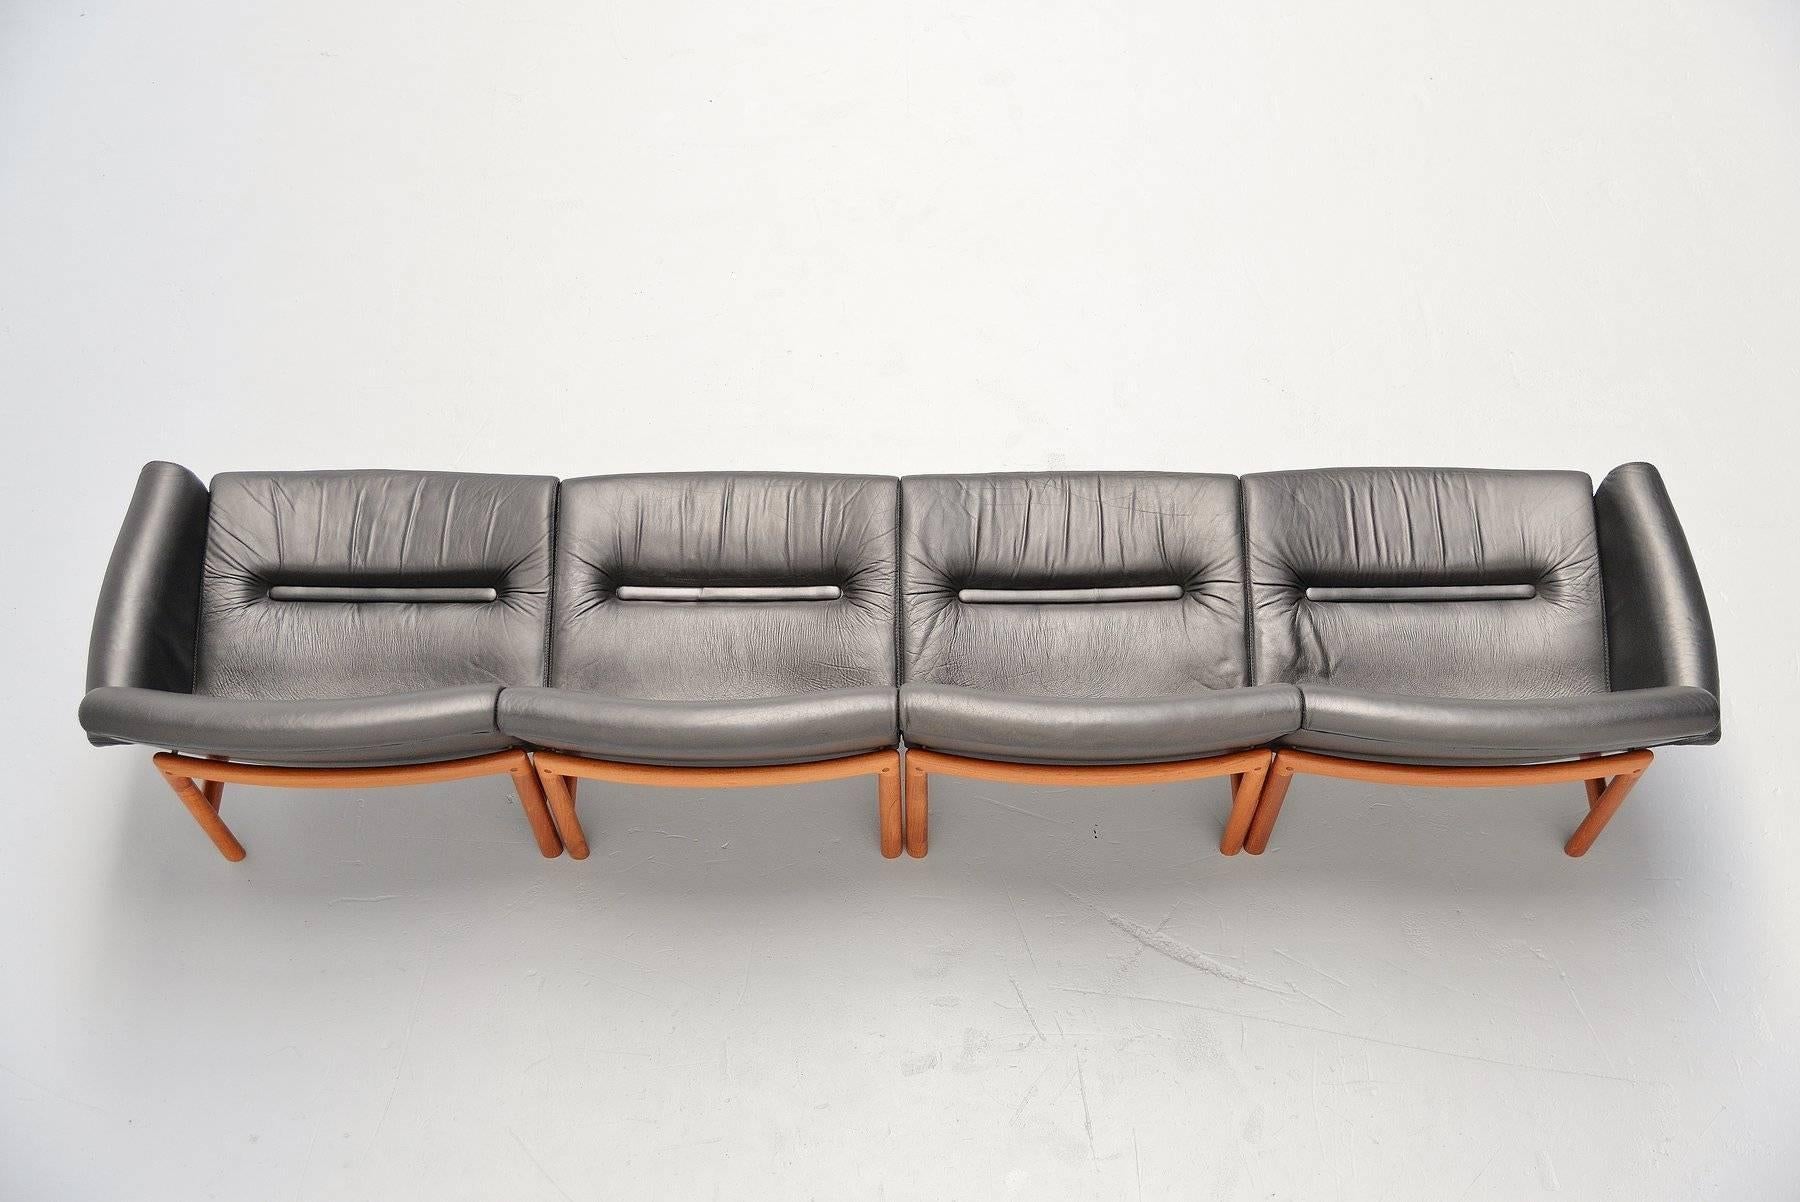 Scandinavian Modern Danish Elemented Sofa Made in Denmark, 1965